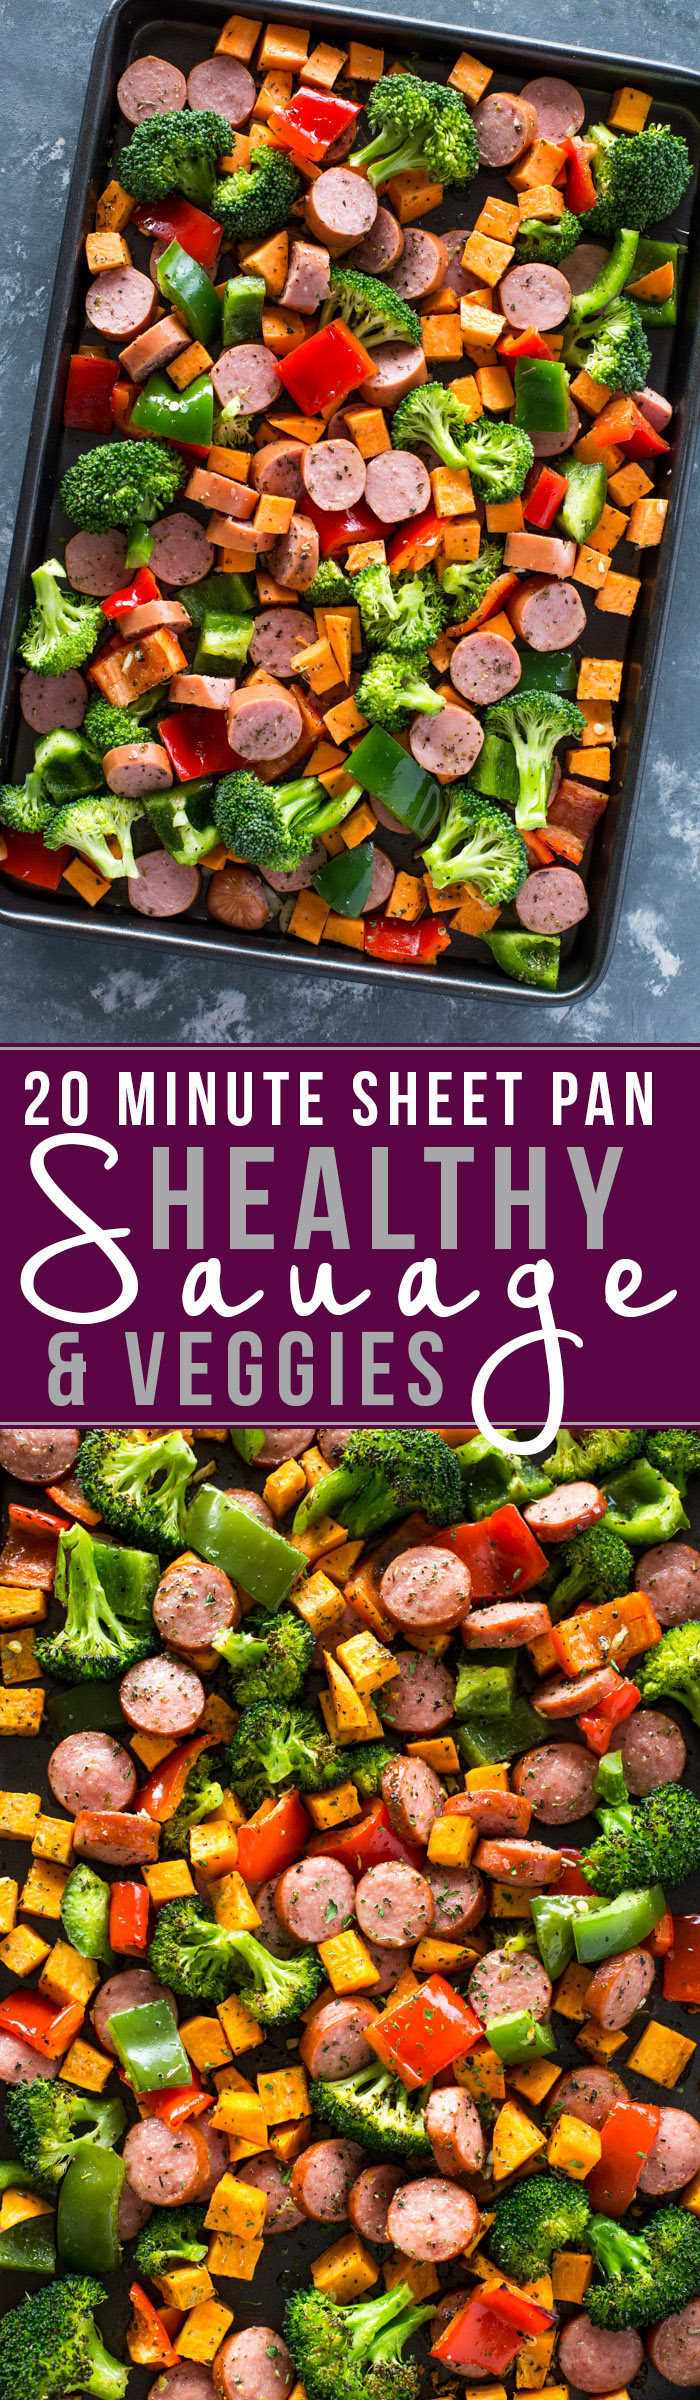 Healthy 20 Minute Sheet Pan Sausage and Veggies